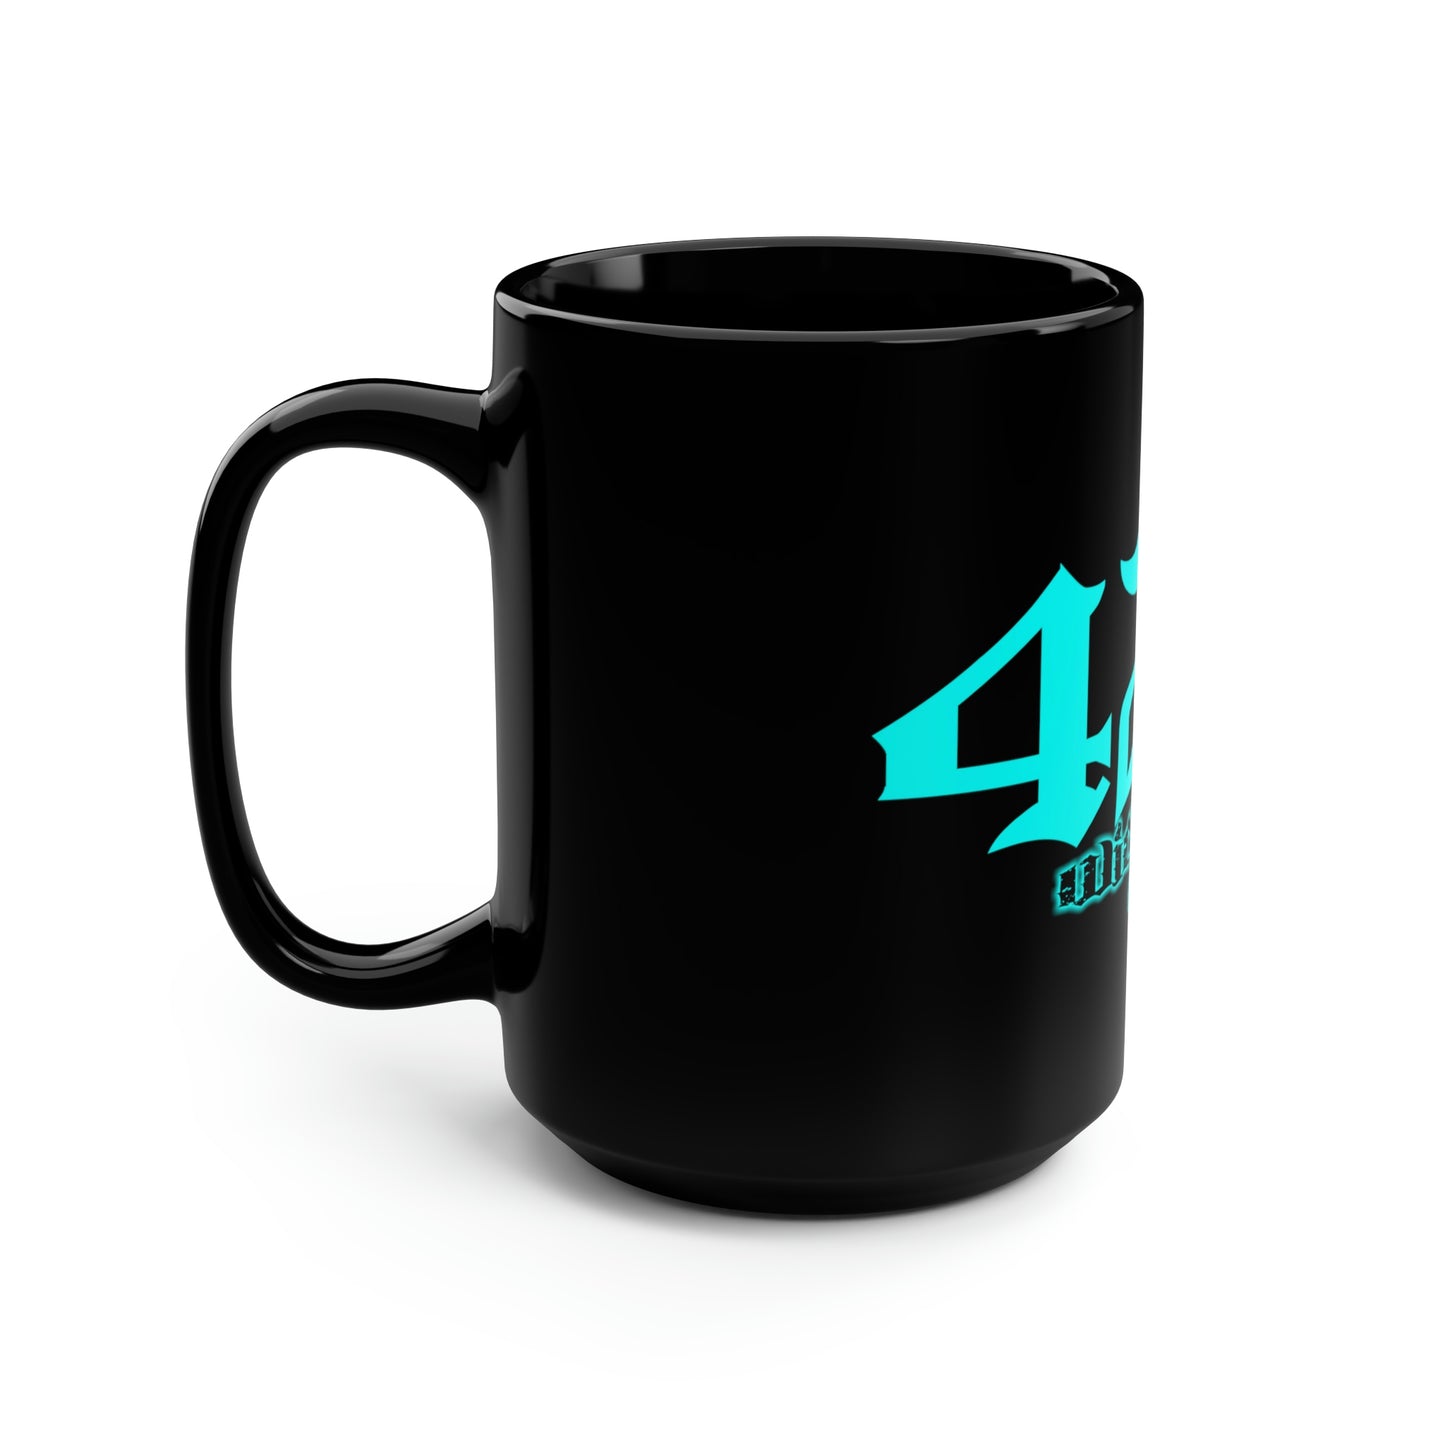 423 Teal/Black Mug, 15oz